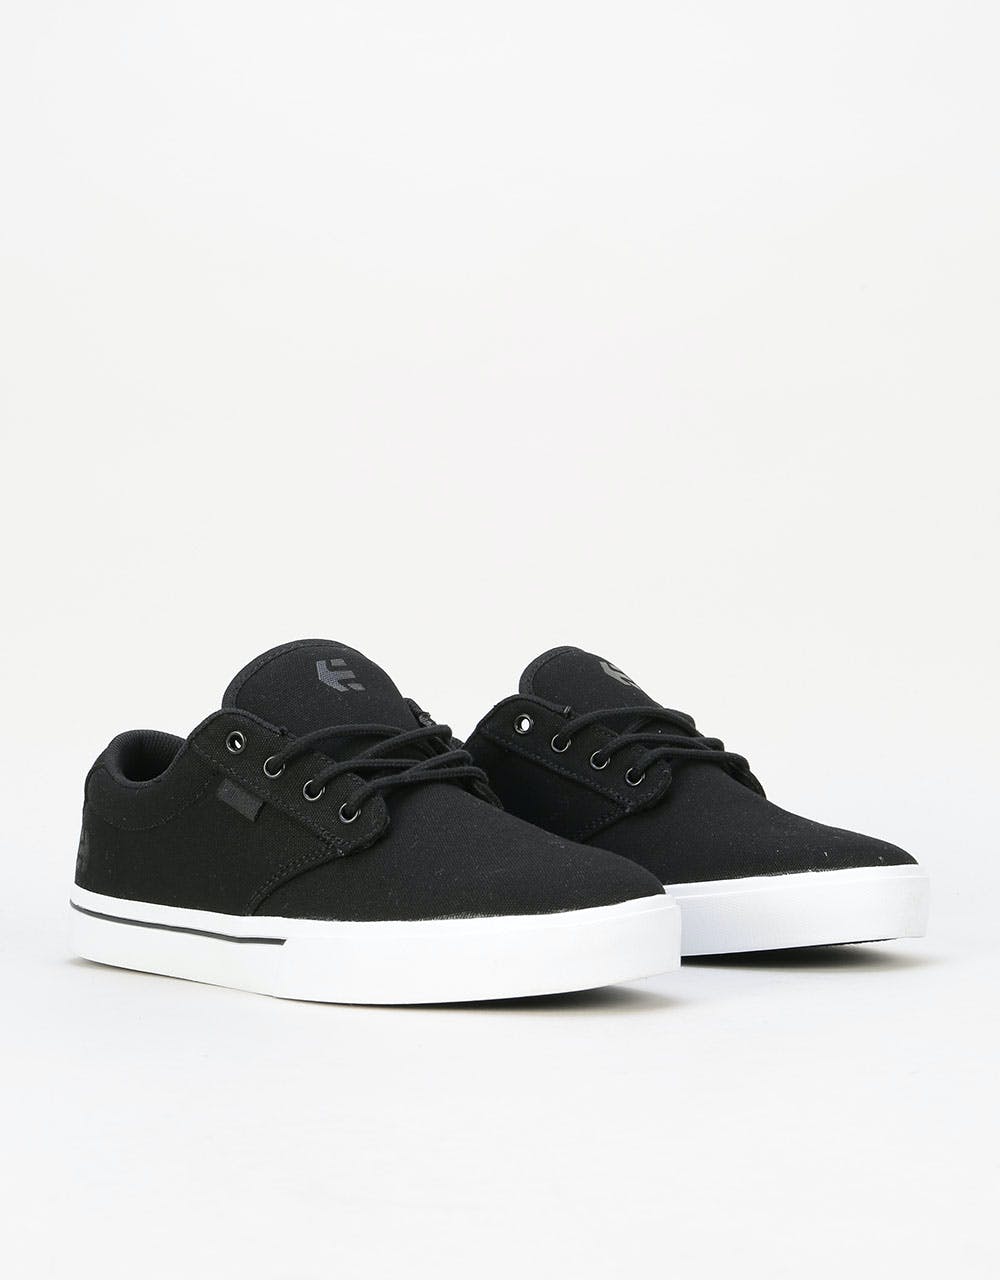 Etnies Jameson 2 Eco Skate Shoes - Black/White/Black